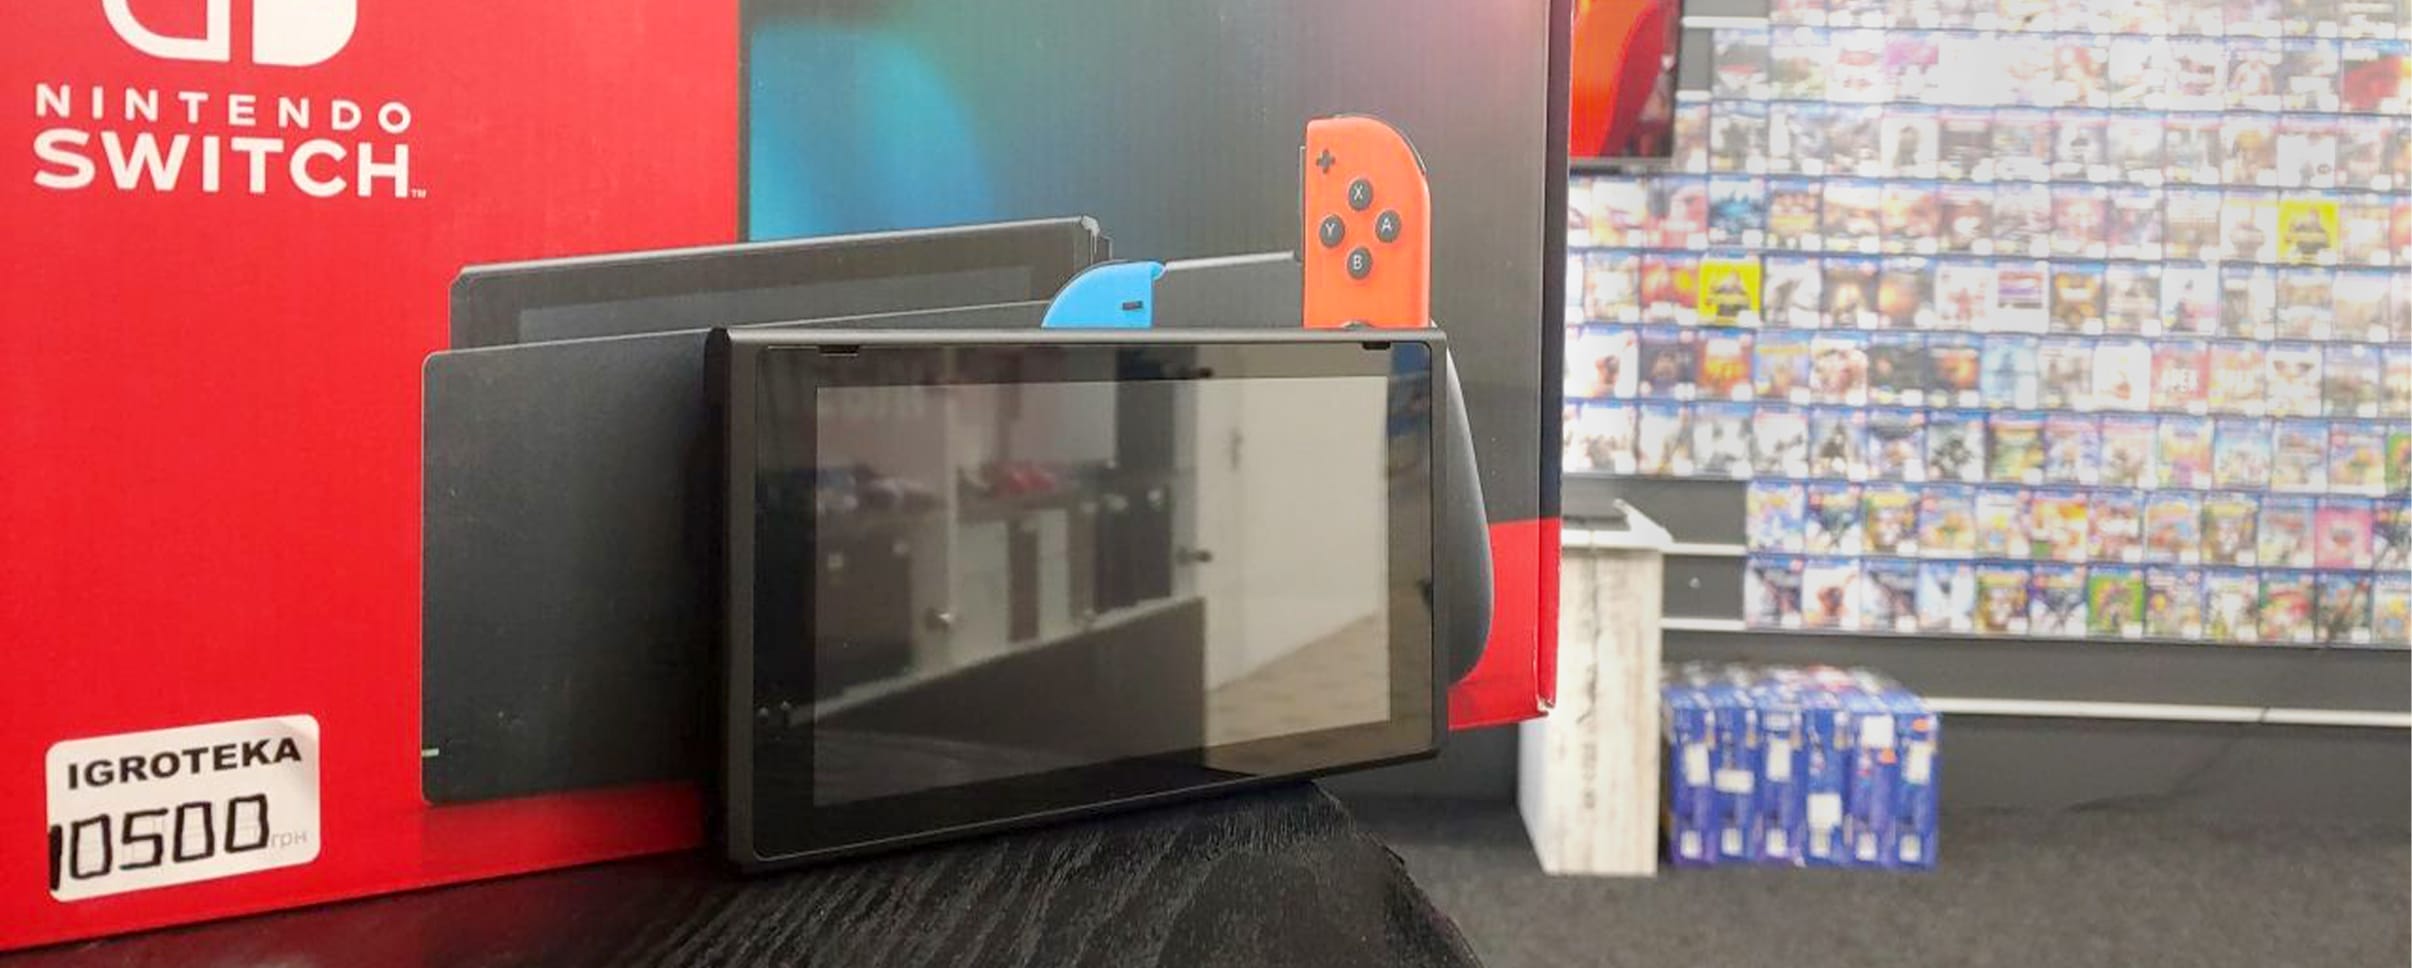 Nintendo Switch, фото продаваемой консоли